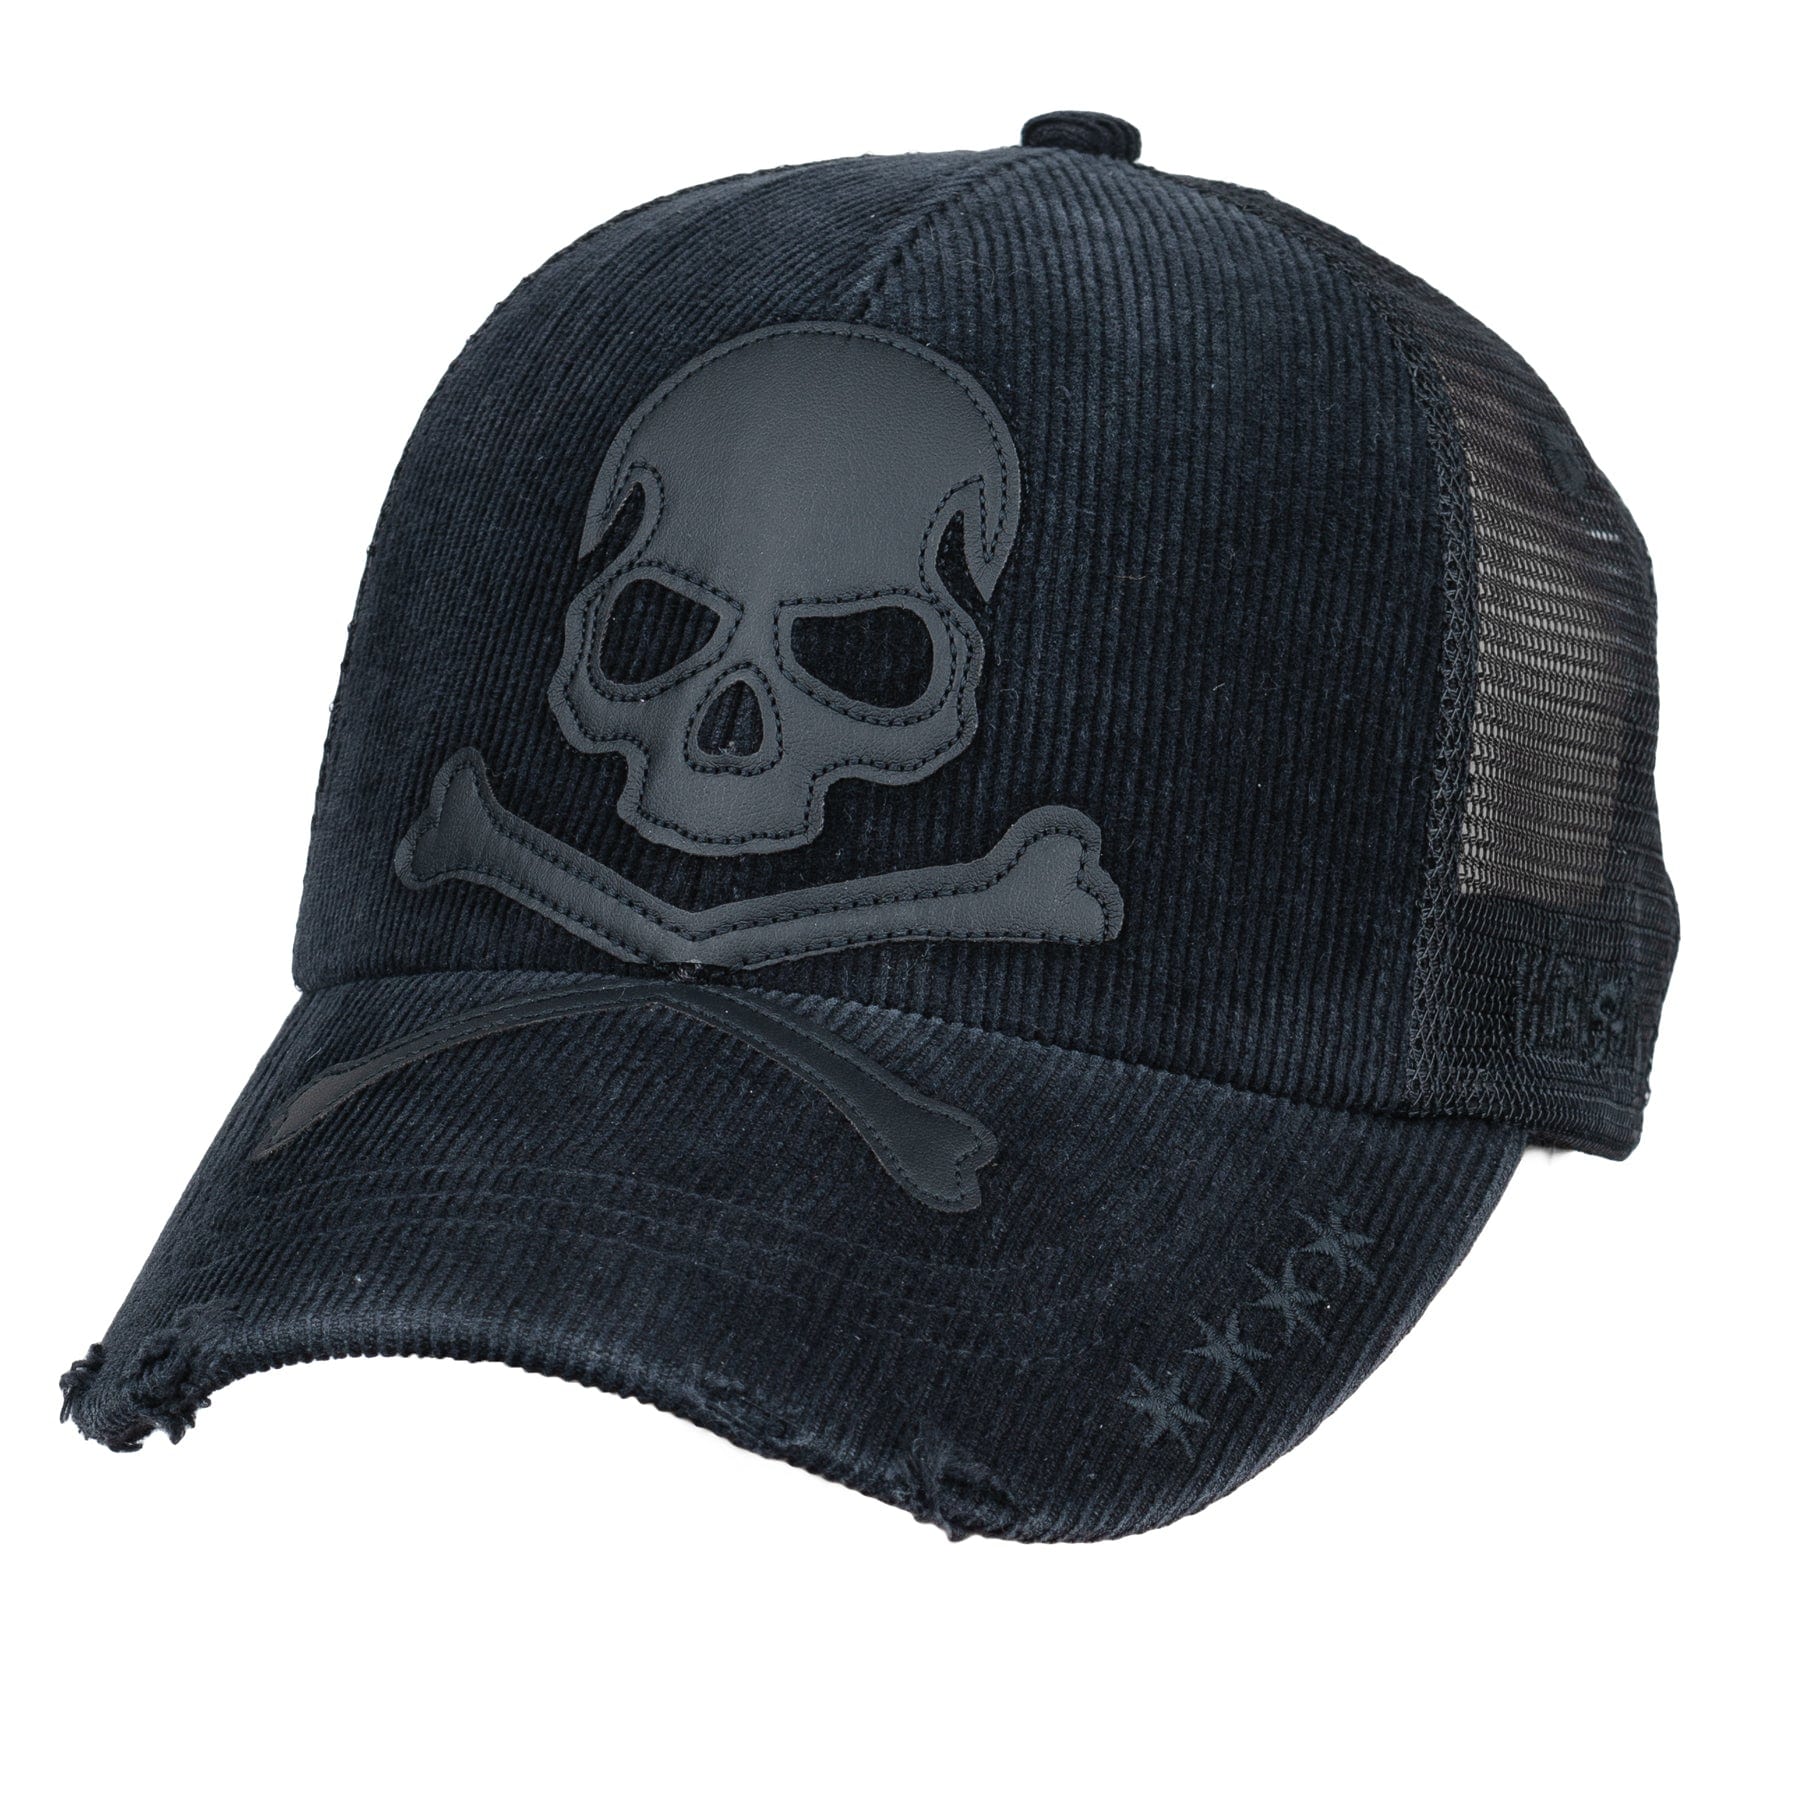 Wornstar Clothing Relentless Black Trucker Hat